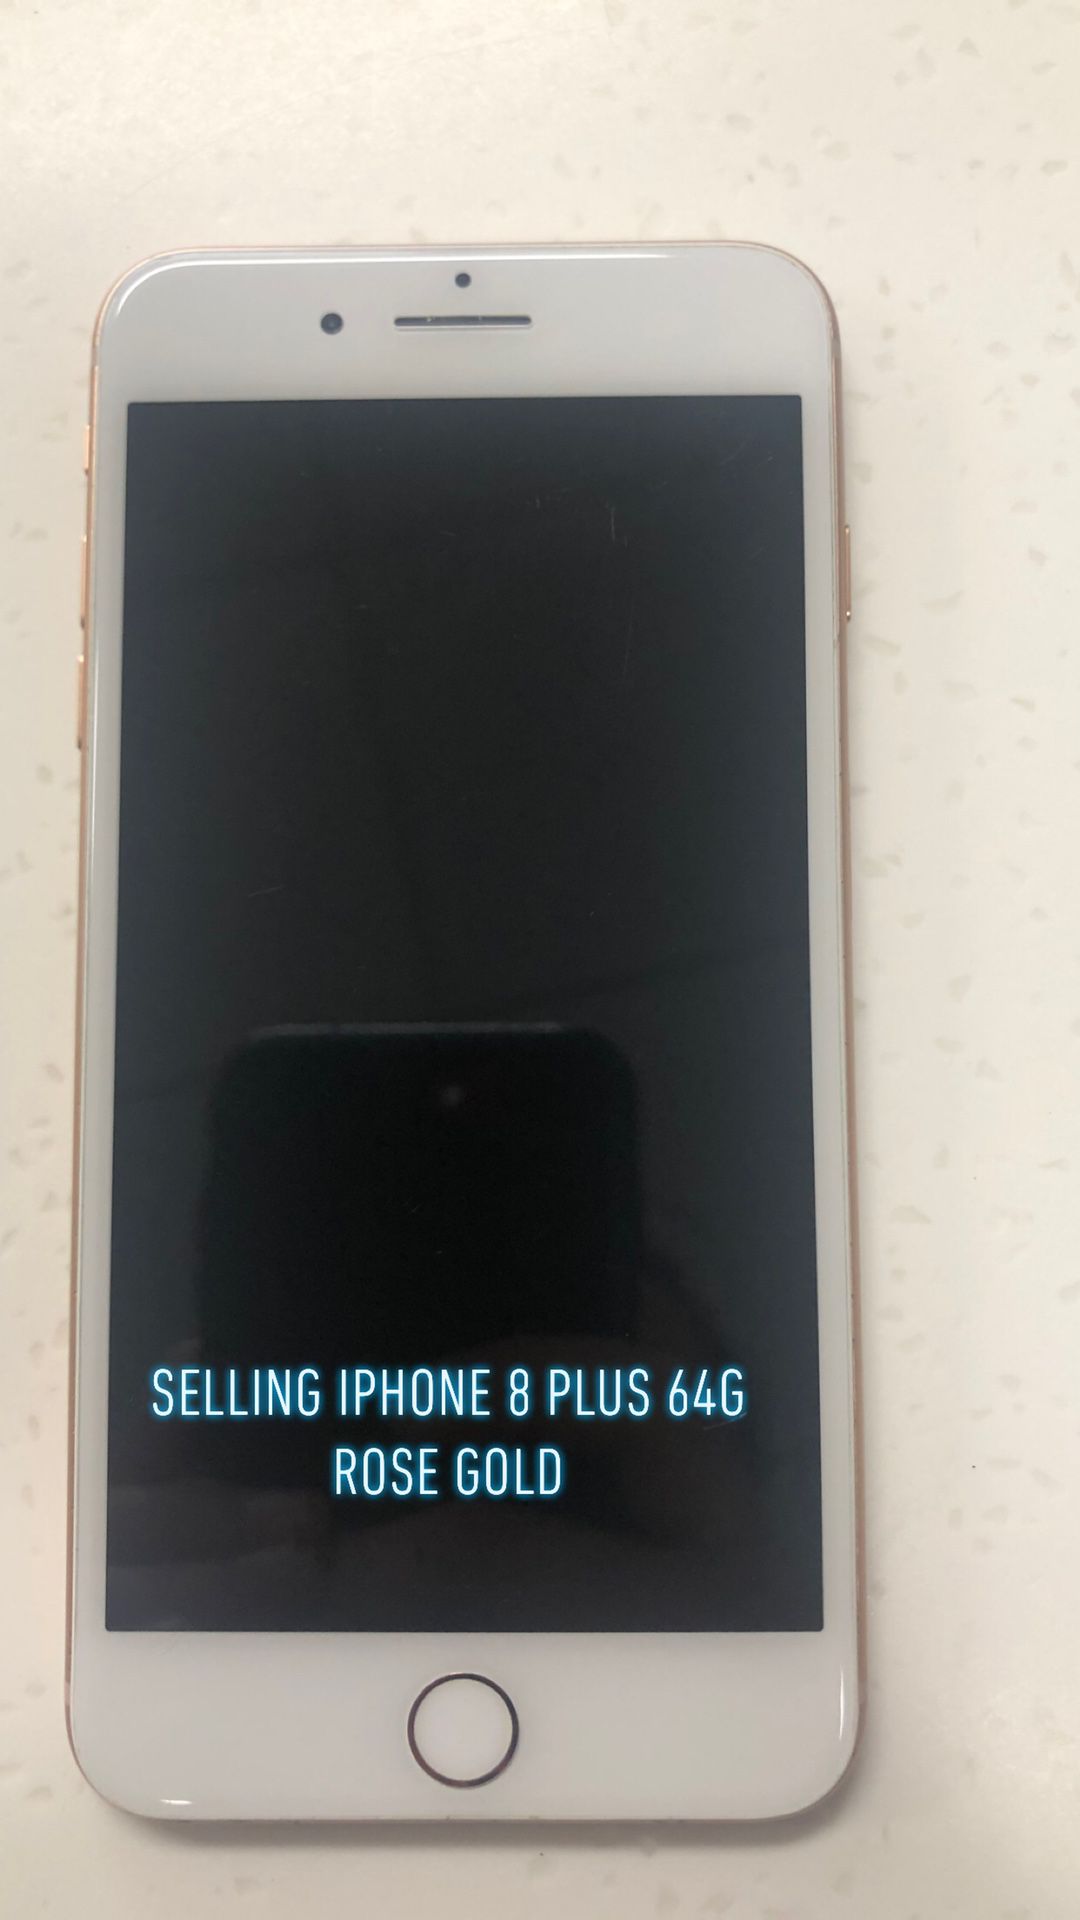 iPhone 8 Plus 64g Rose Gold Unlocked